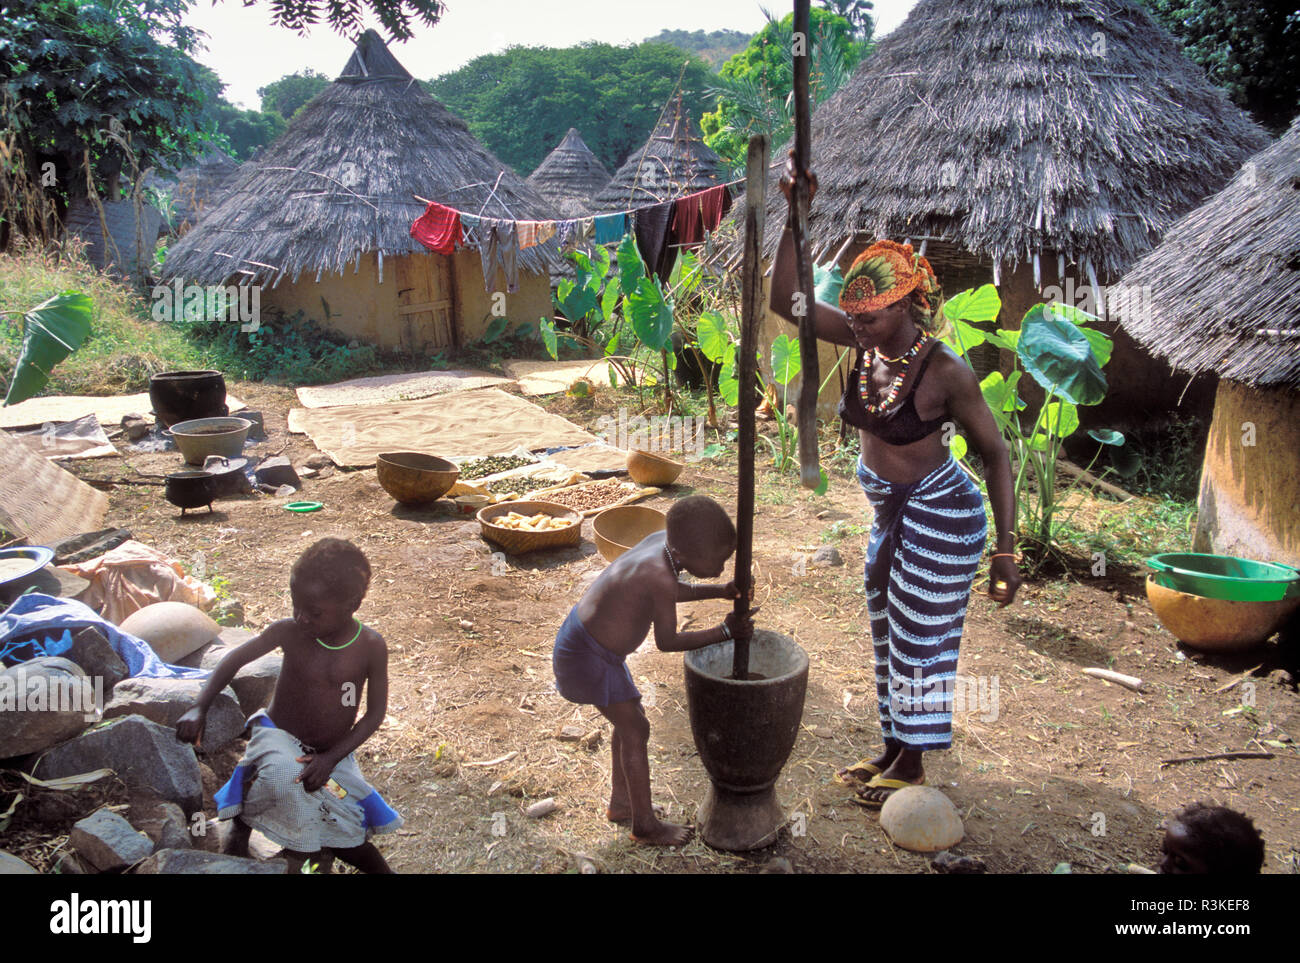 Senegal, Bedik tribe, Iwol village. Amer Keita pounding grain with her three children. Keita is one of the two important families in village of Iwol. Stock Photo